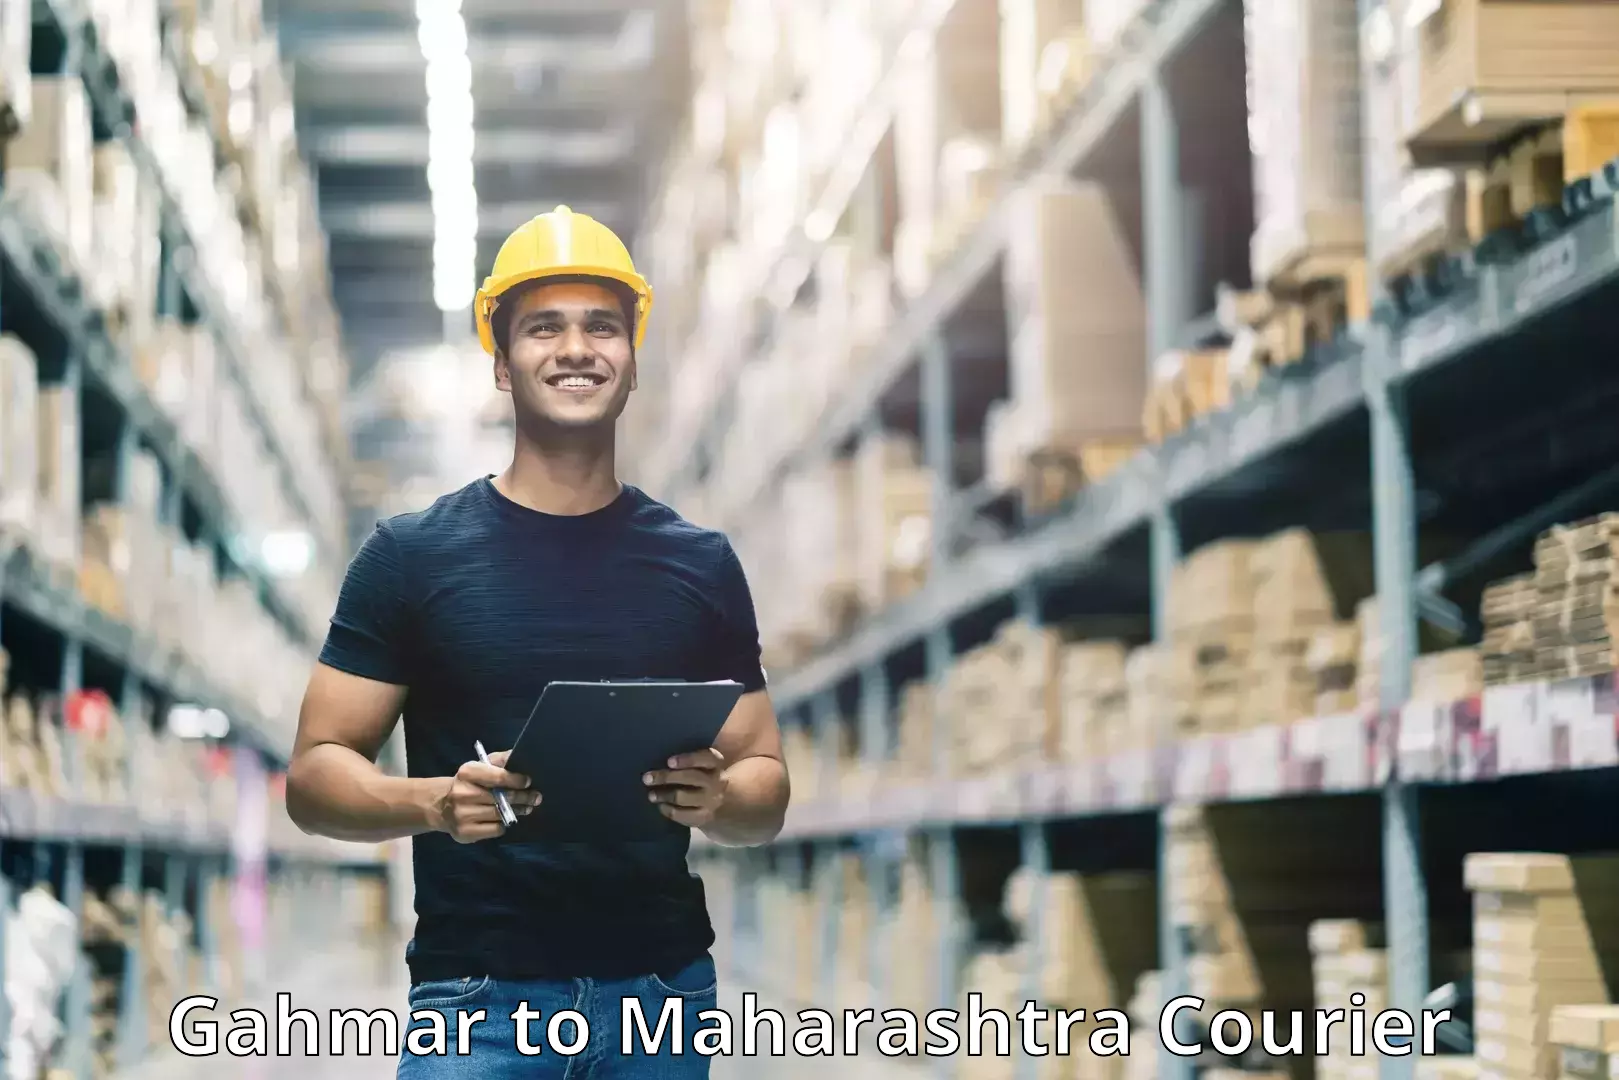 User-friendly courier app Gahmar to Maharashtra